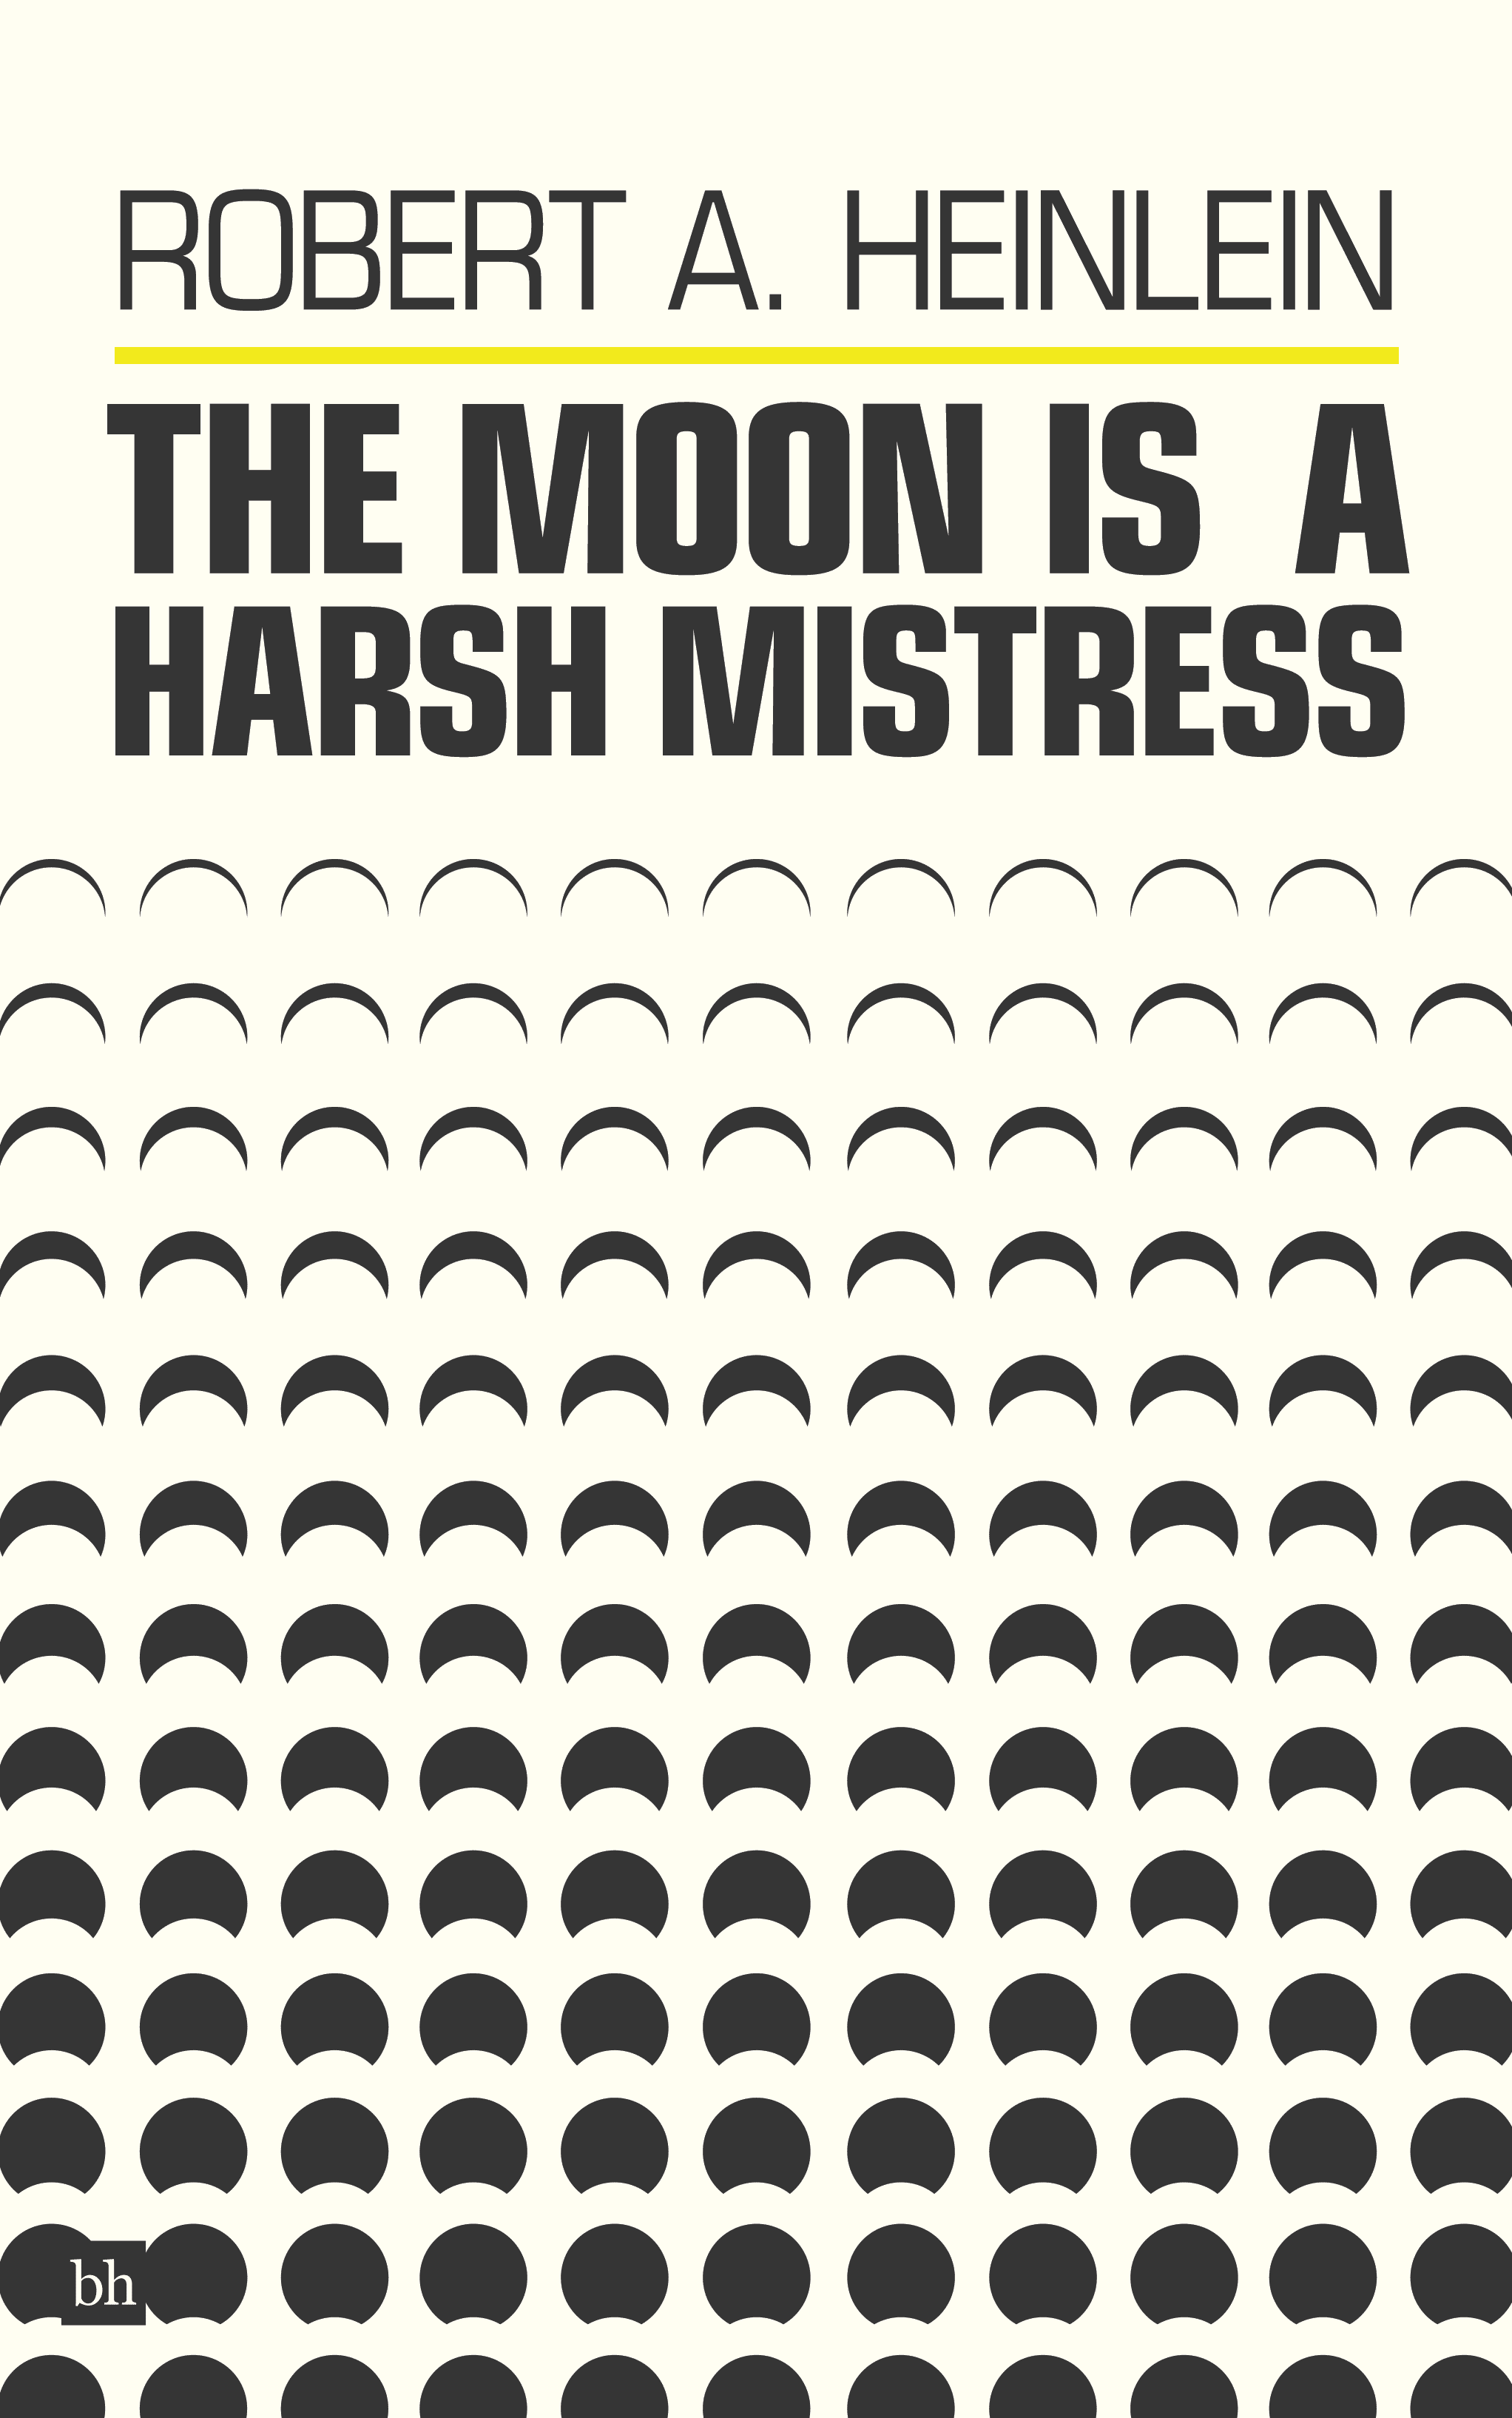 The Moon Is A Harsh Mistress by Robert A. Heinlein